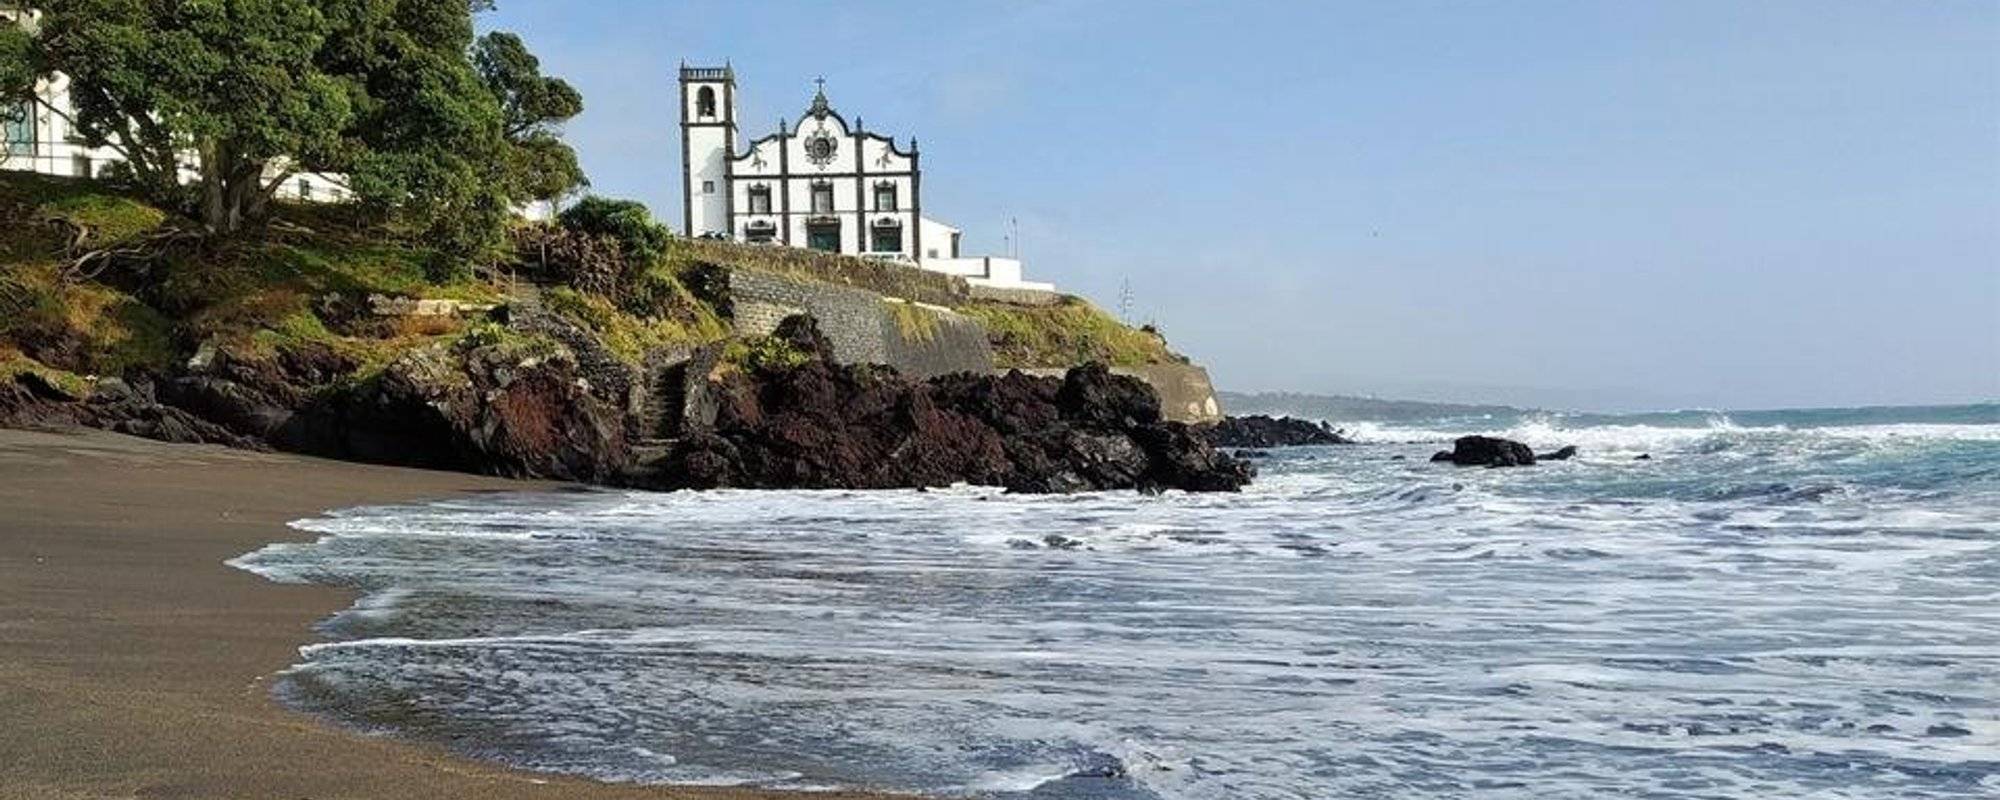 Beauties of Azores: picturesque Church of Sao Roque in Ponta Delgada